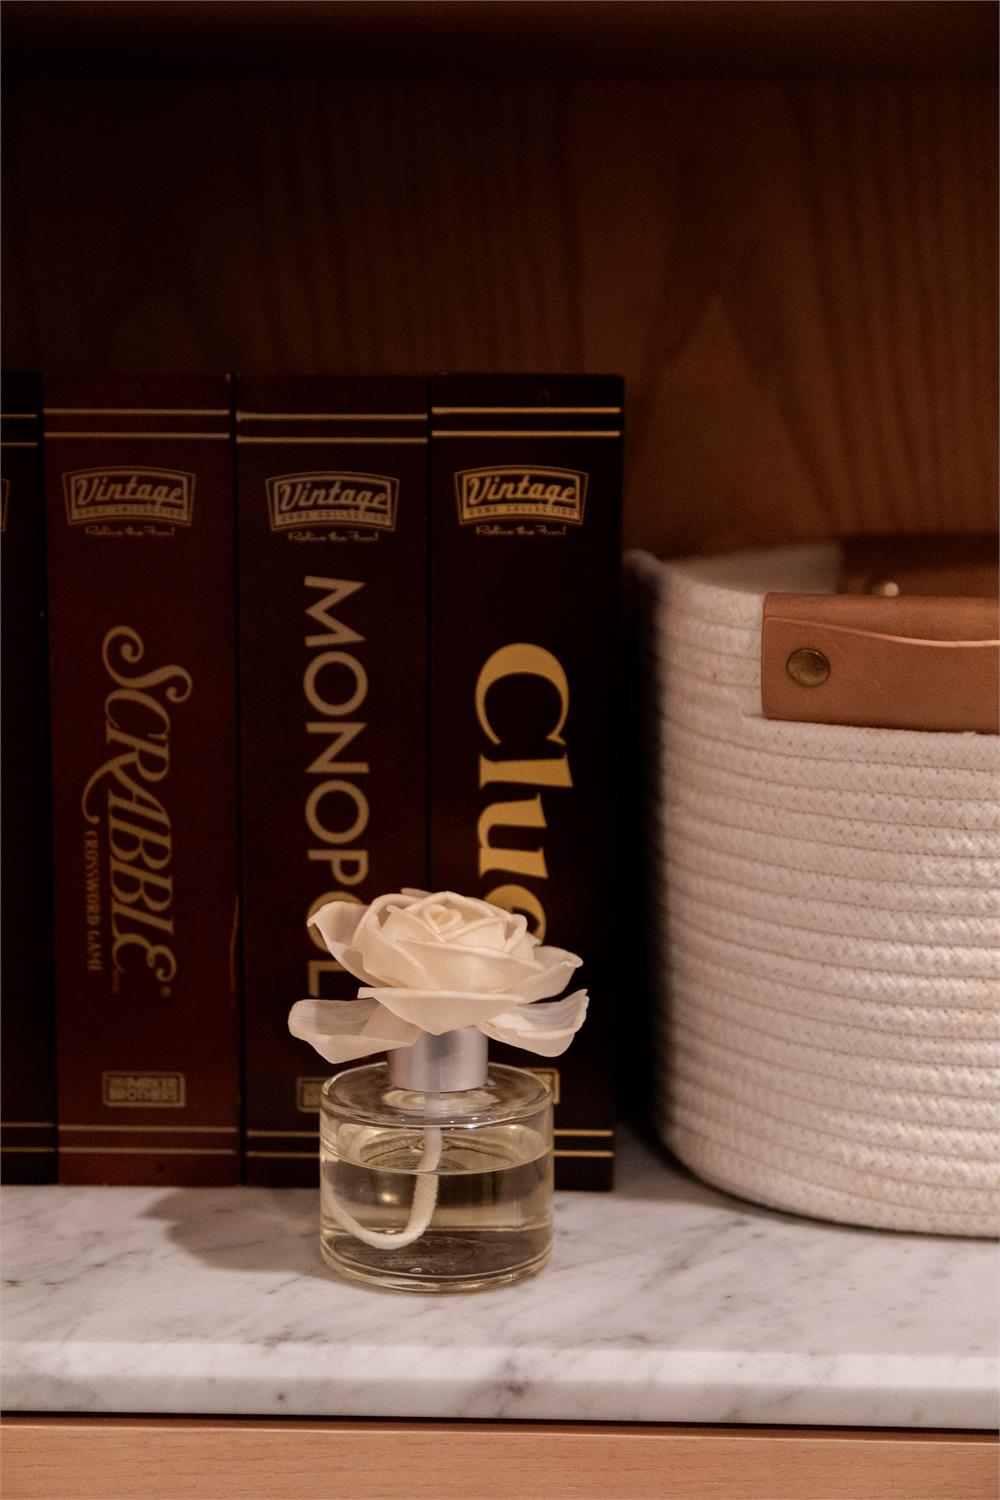 Bridgewater Sweet Grace Mini Flower Diffuser-Home Fragrances-Bridgewater-1000002930, TTCB2947-The Twisted Chandelier